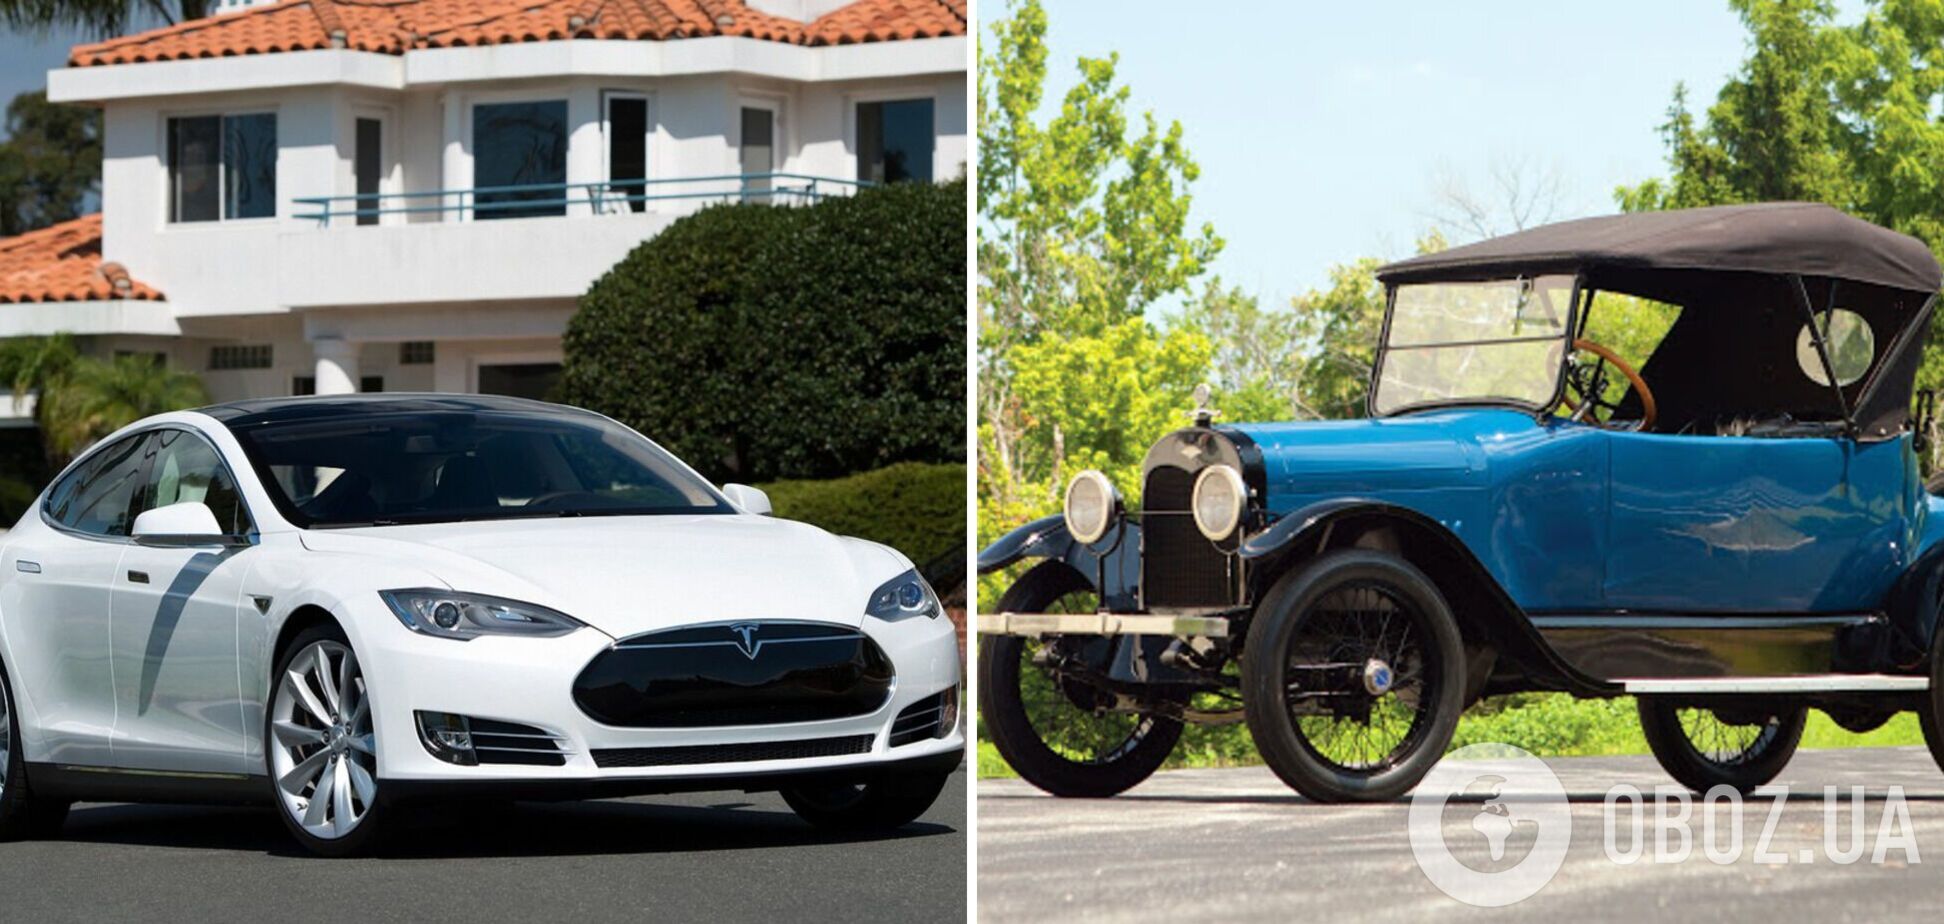 Auburn 6-39 и Tesla Model S